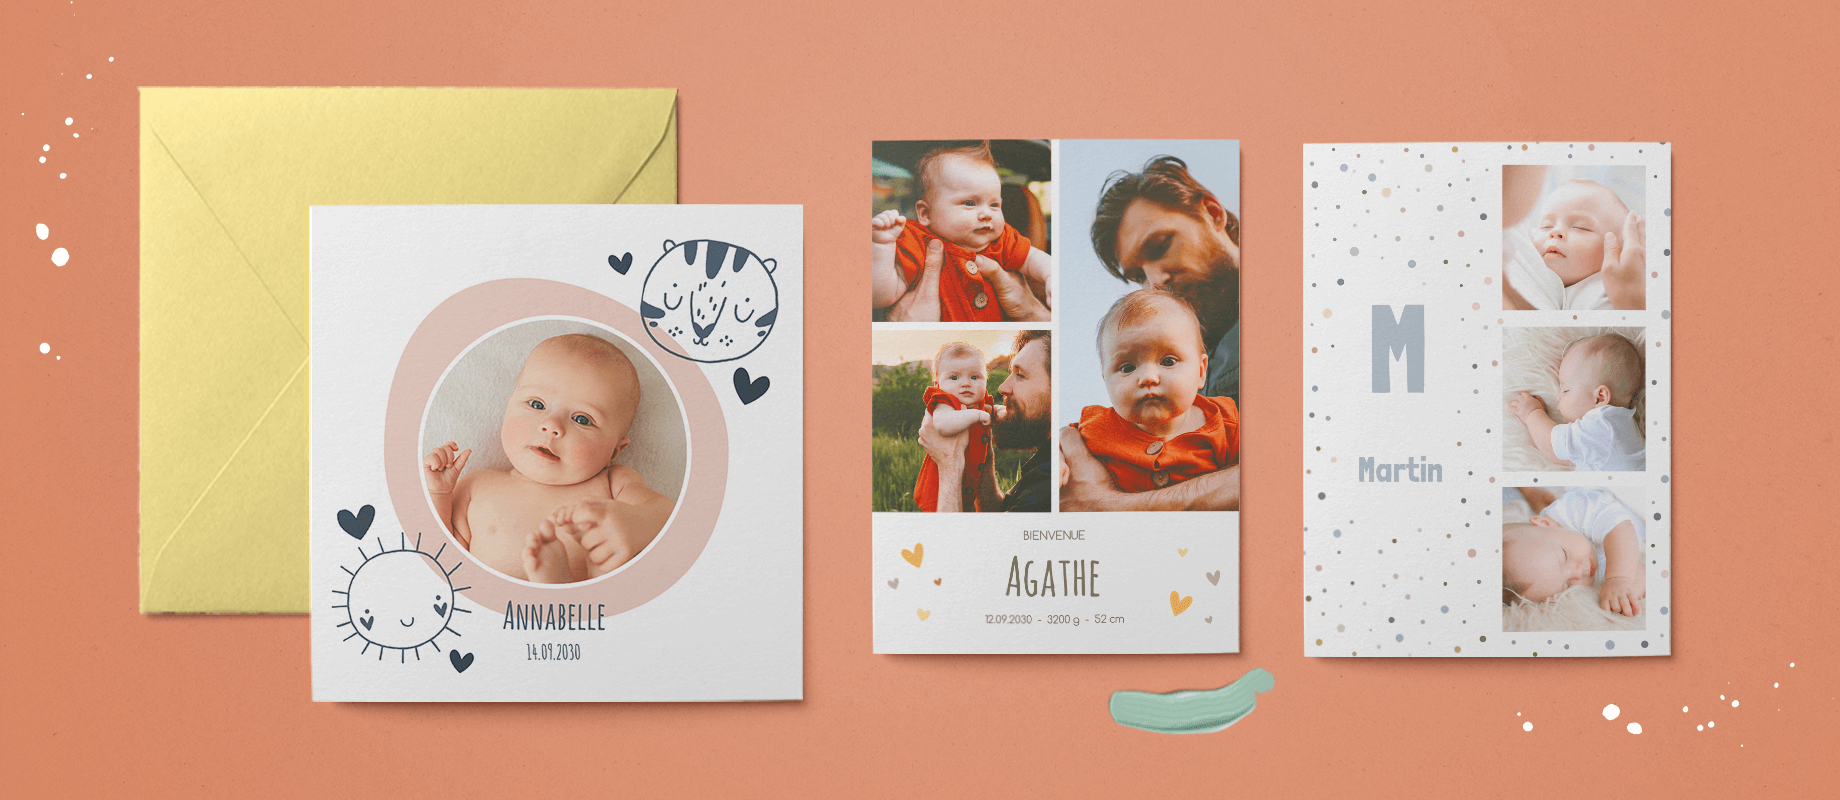 3 cartes de naissance avec photos de bébé et prénom.